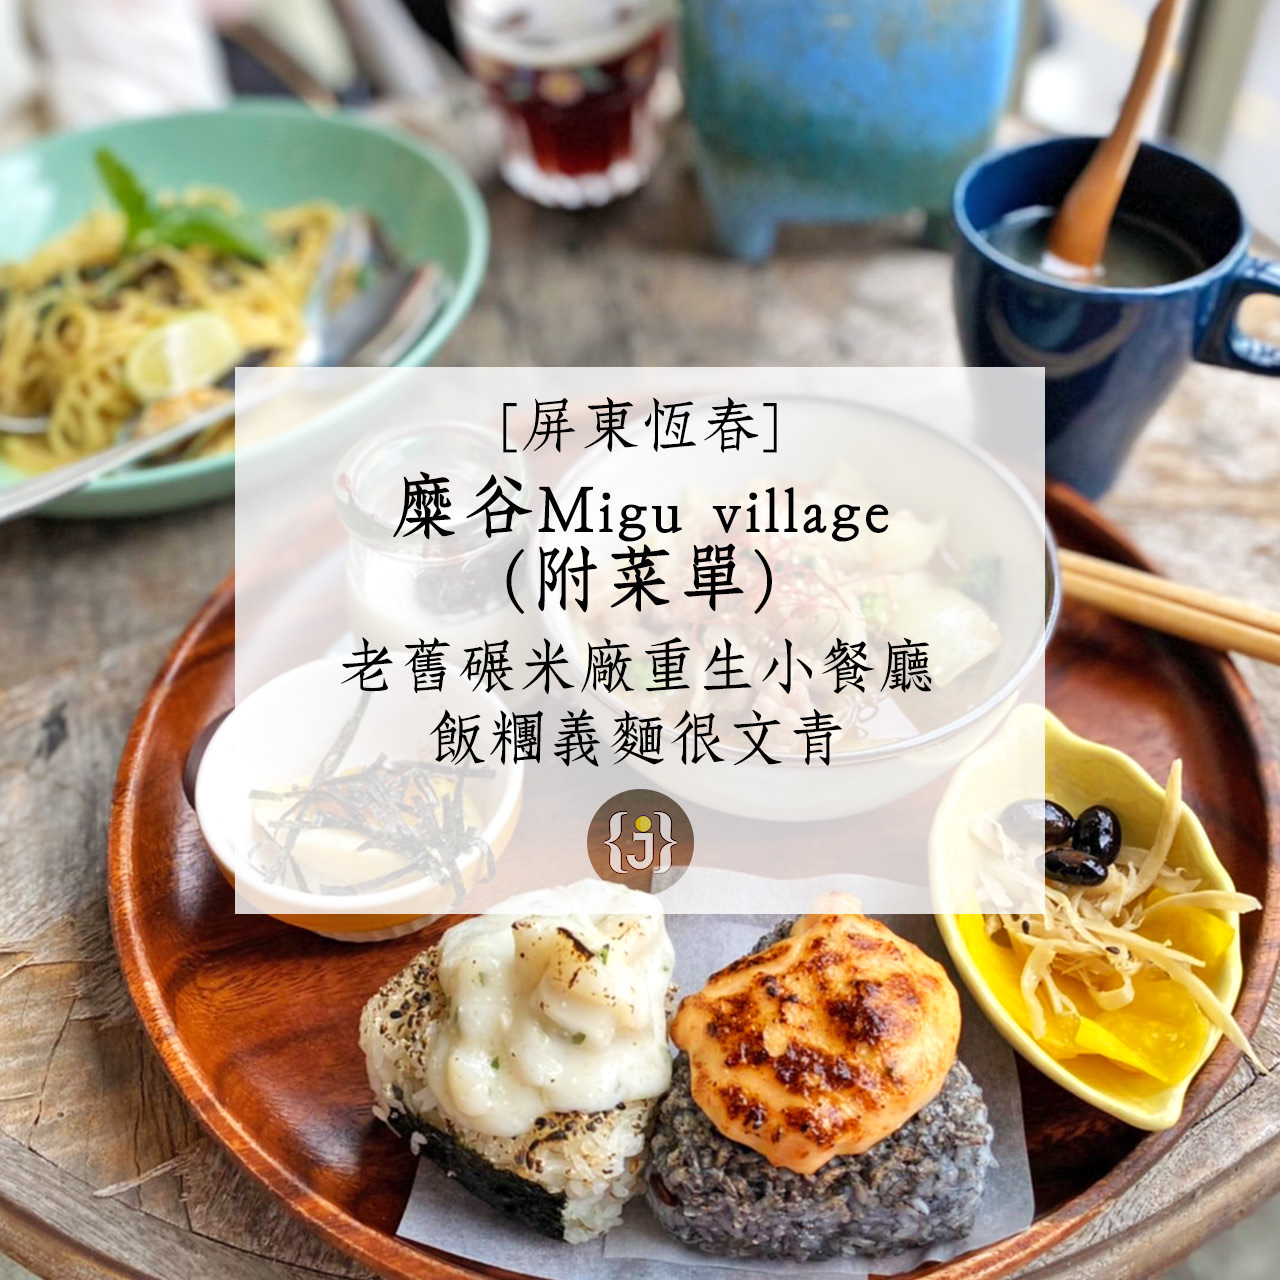 Migu village附菜單老舊碾米廠重生小餐廳 飯糰義麵很文青 1